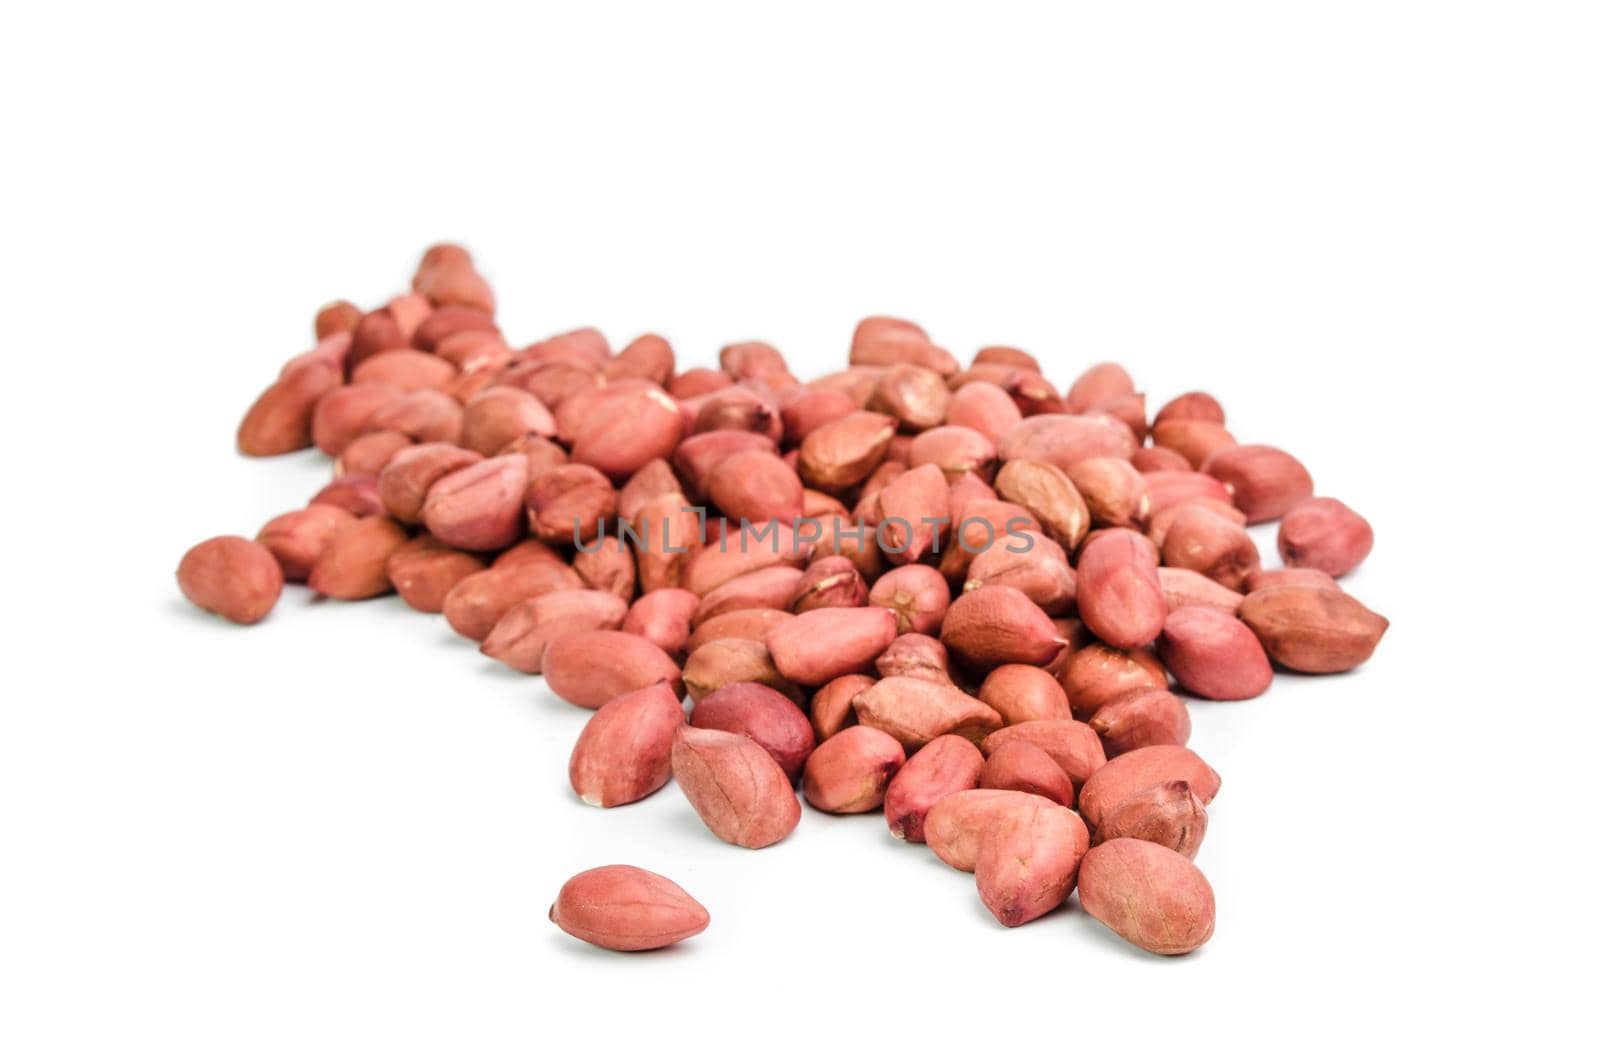 Dried peanuts in closeup by Proff